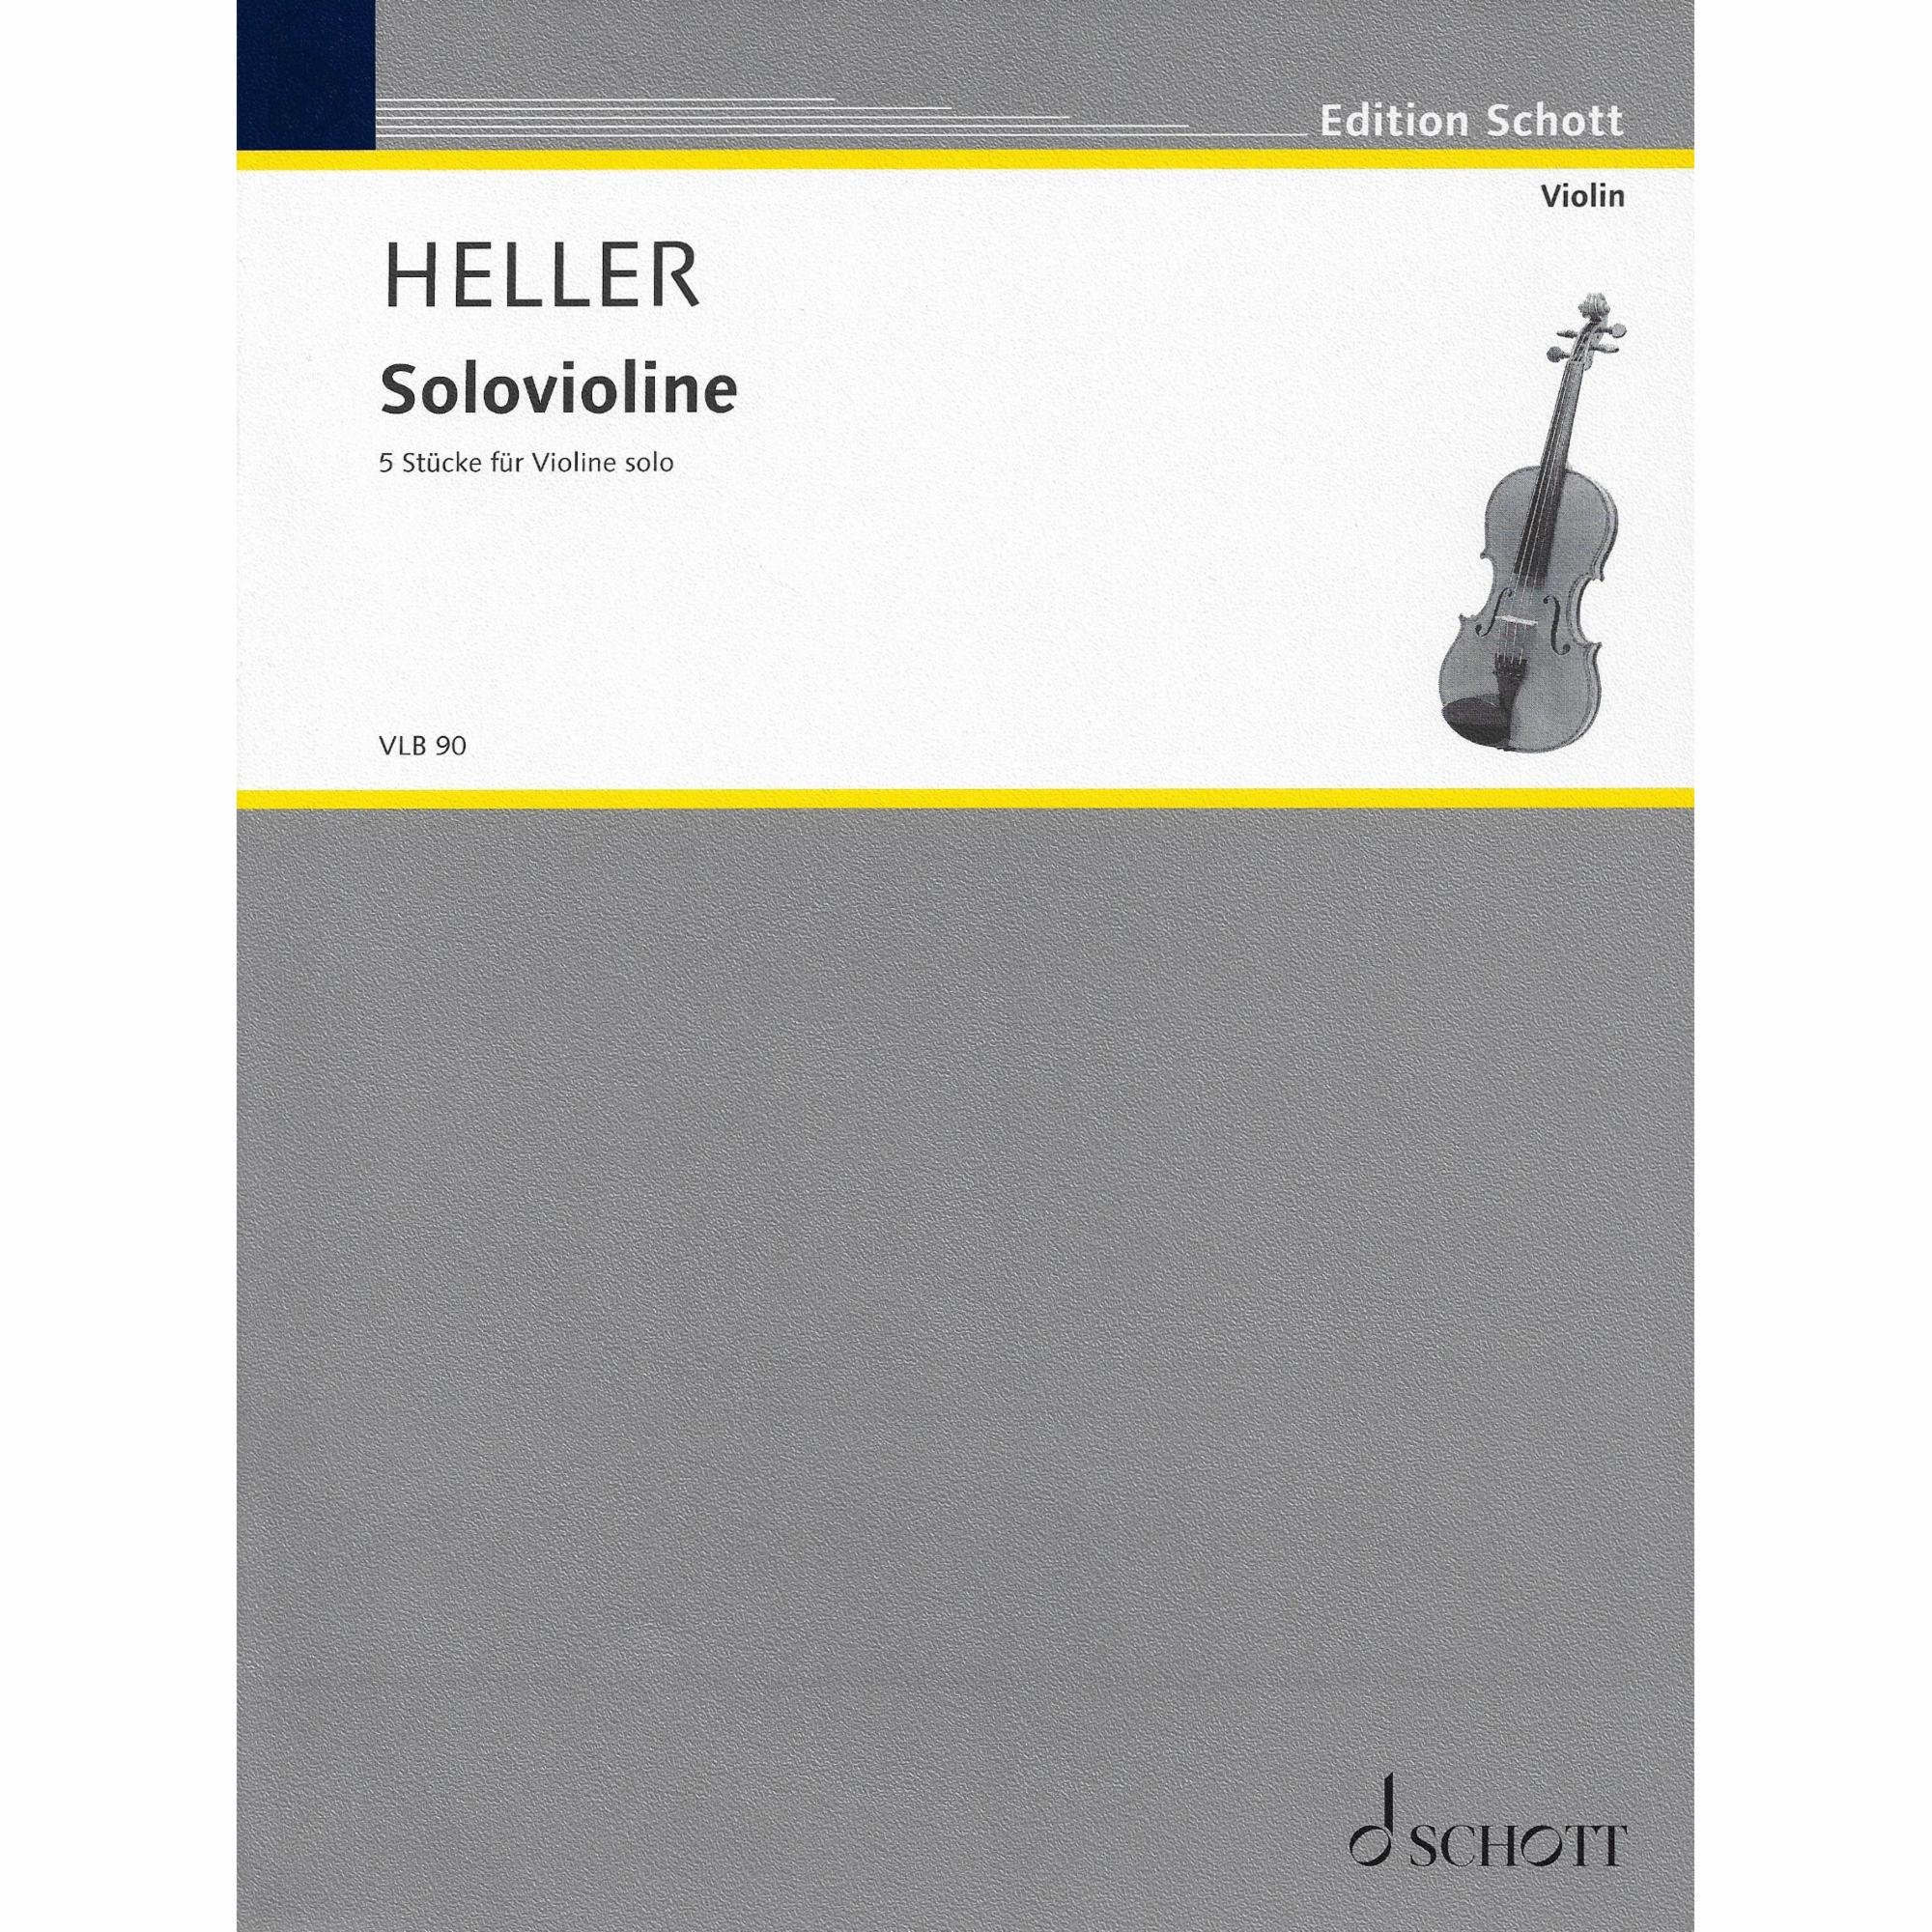 Heller - Solovioline: Five Pieces for Solo Violin